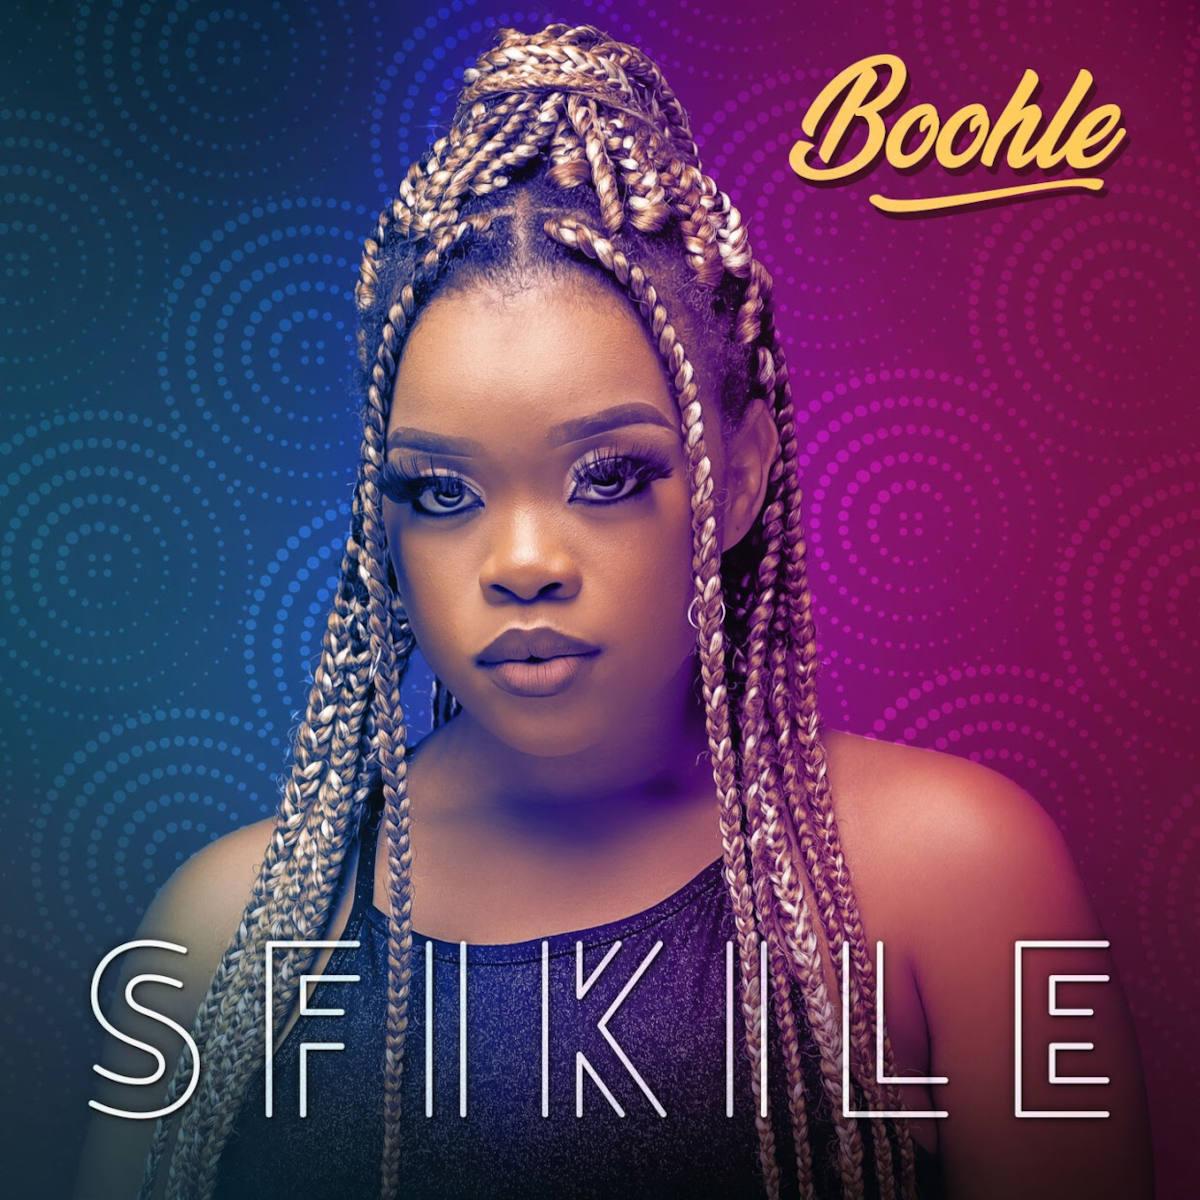 Boohle – Amawaza (feat. Busta 929 & Mpura)